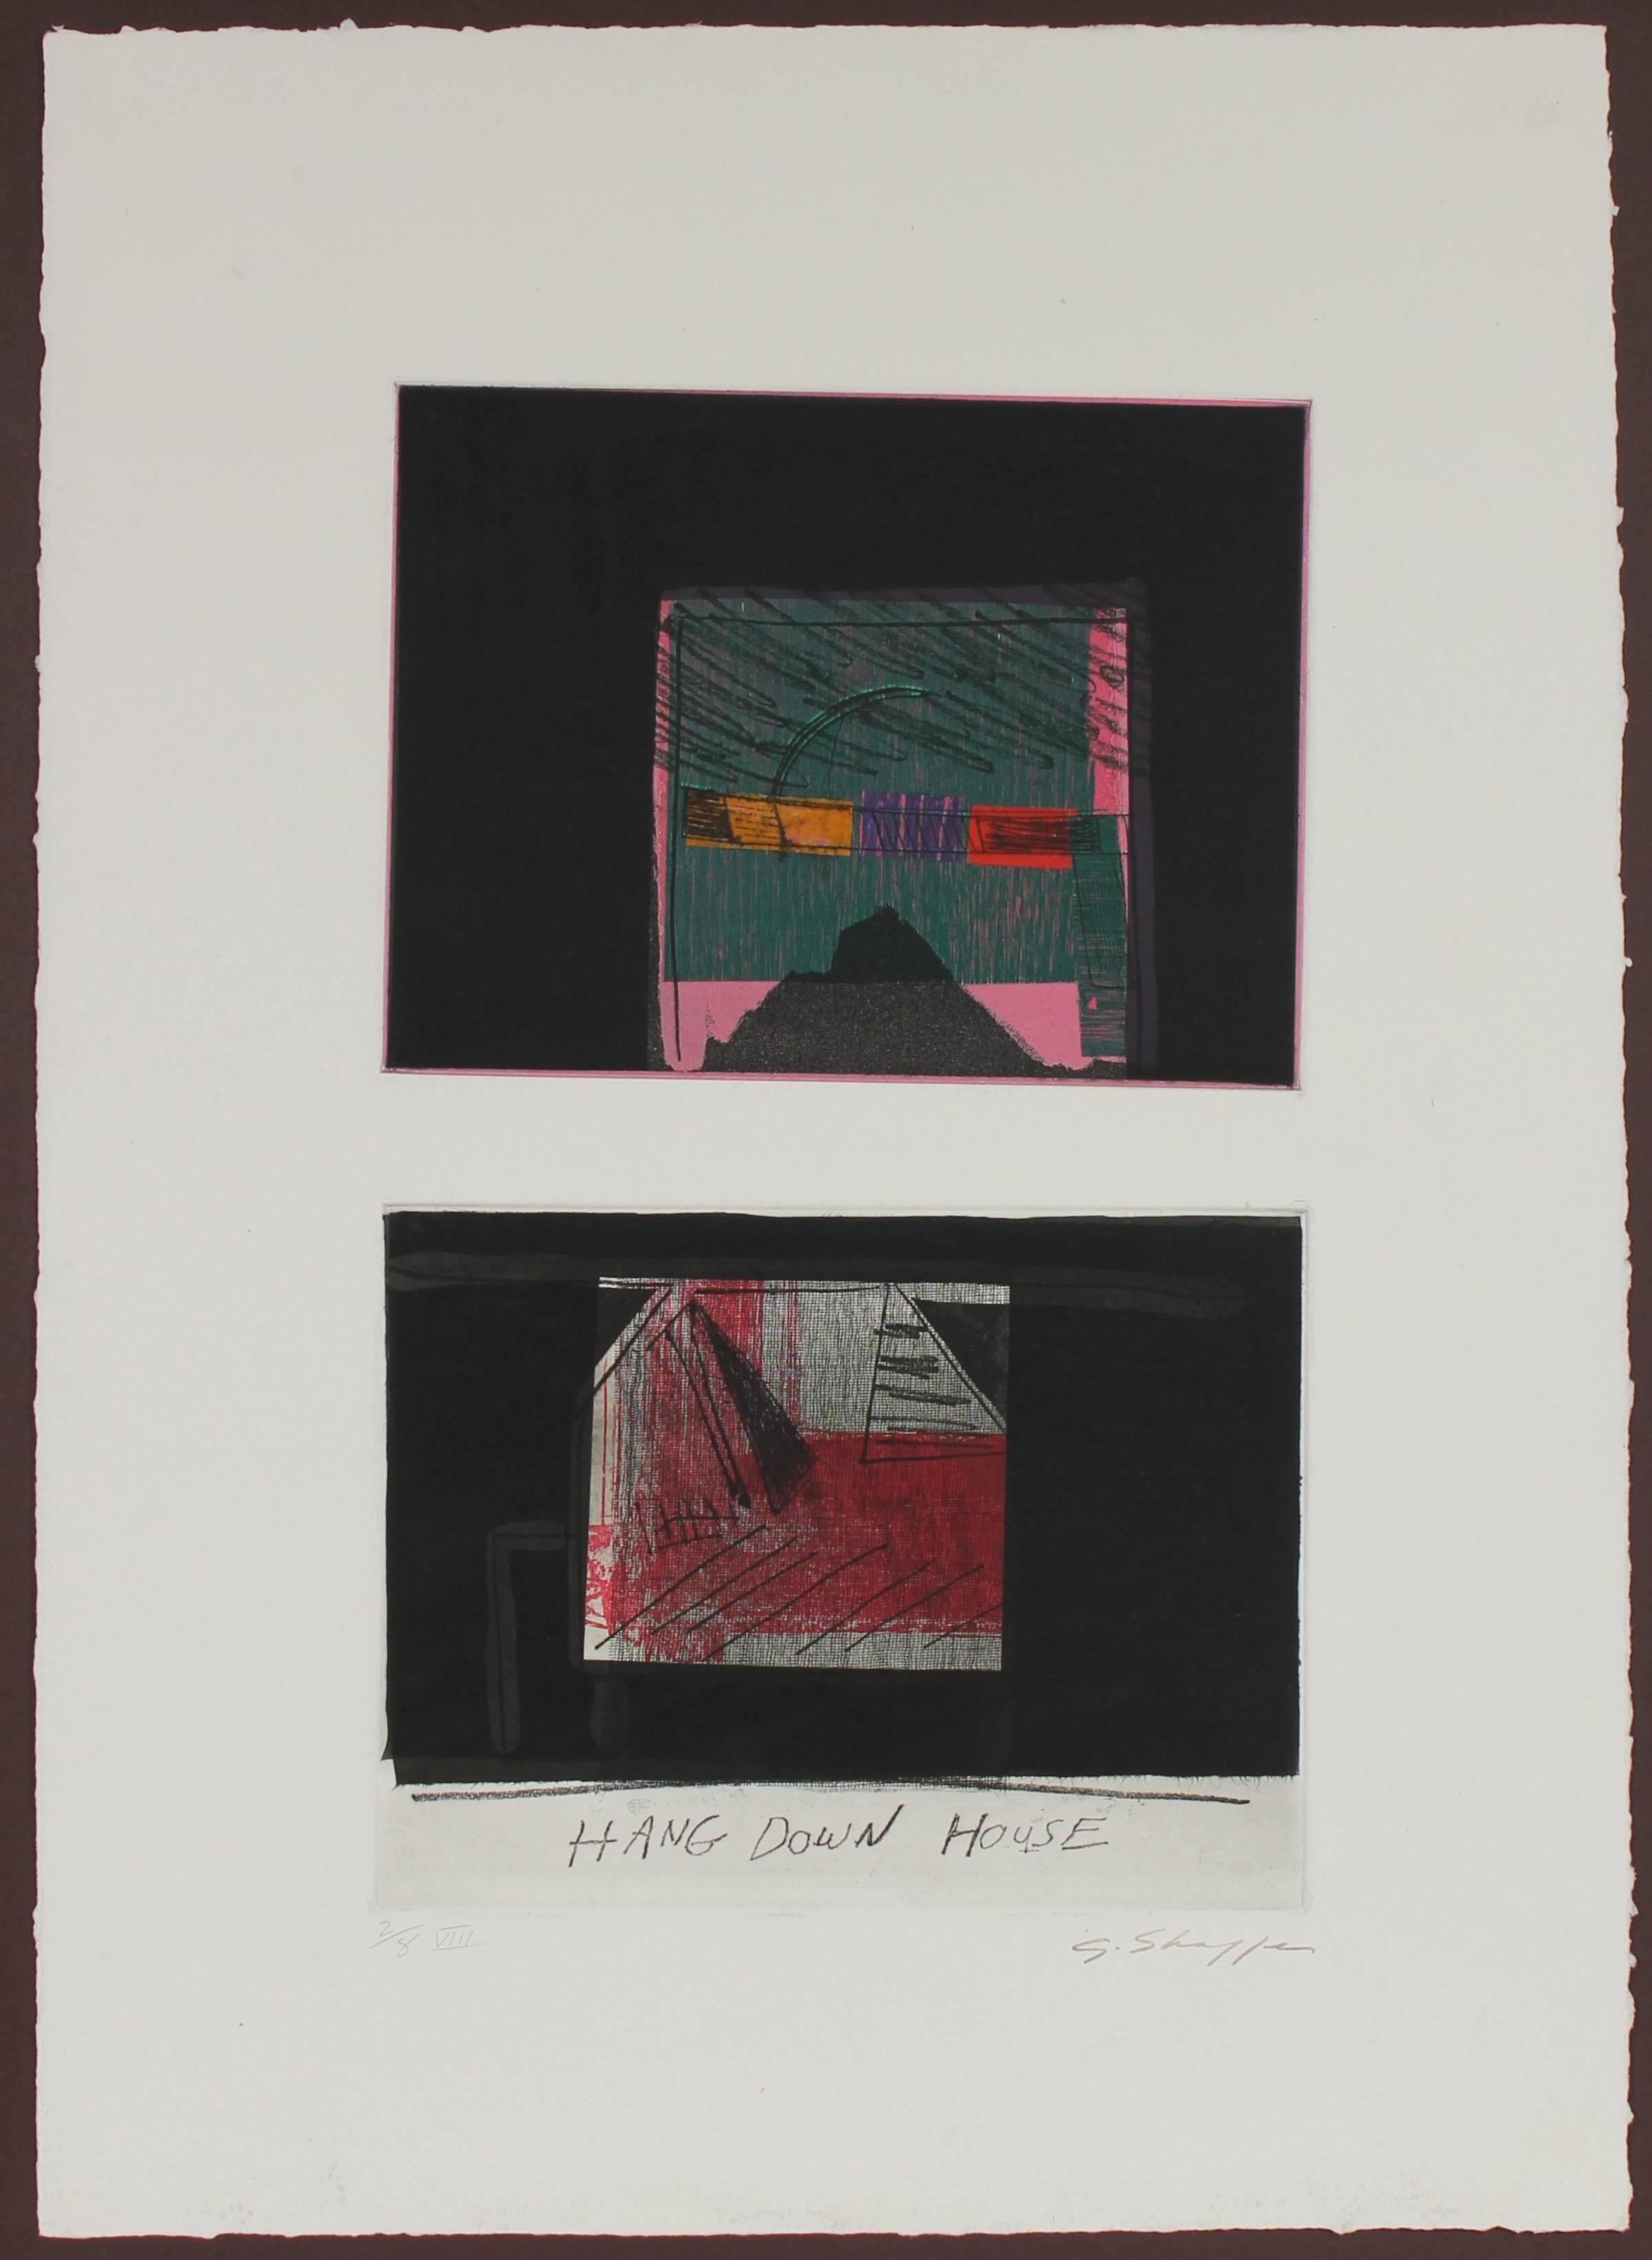 Gary Lee Shaffer Abstract Print - "Hang Down House" Mixed Media Print, 1989